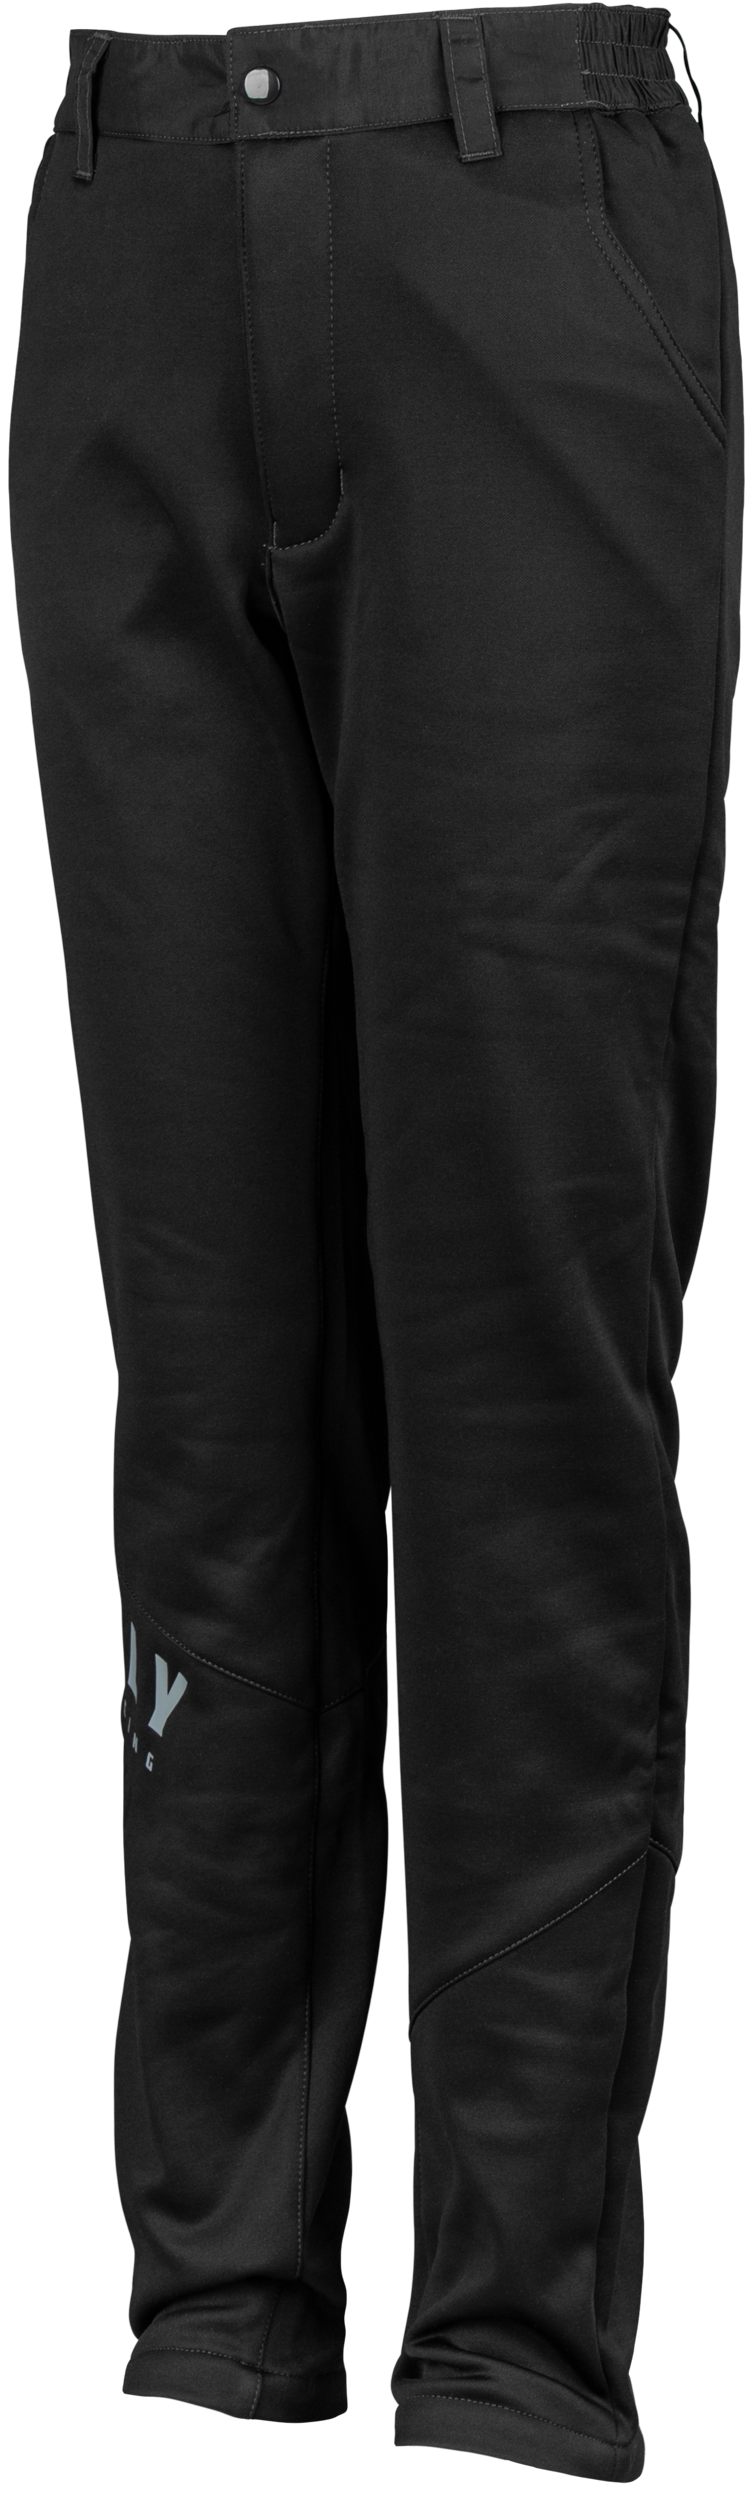 FLY RACING Women's Mid-Layer Pants Black 3x 354-63473X